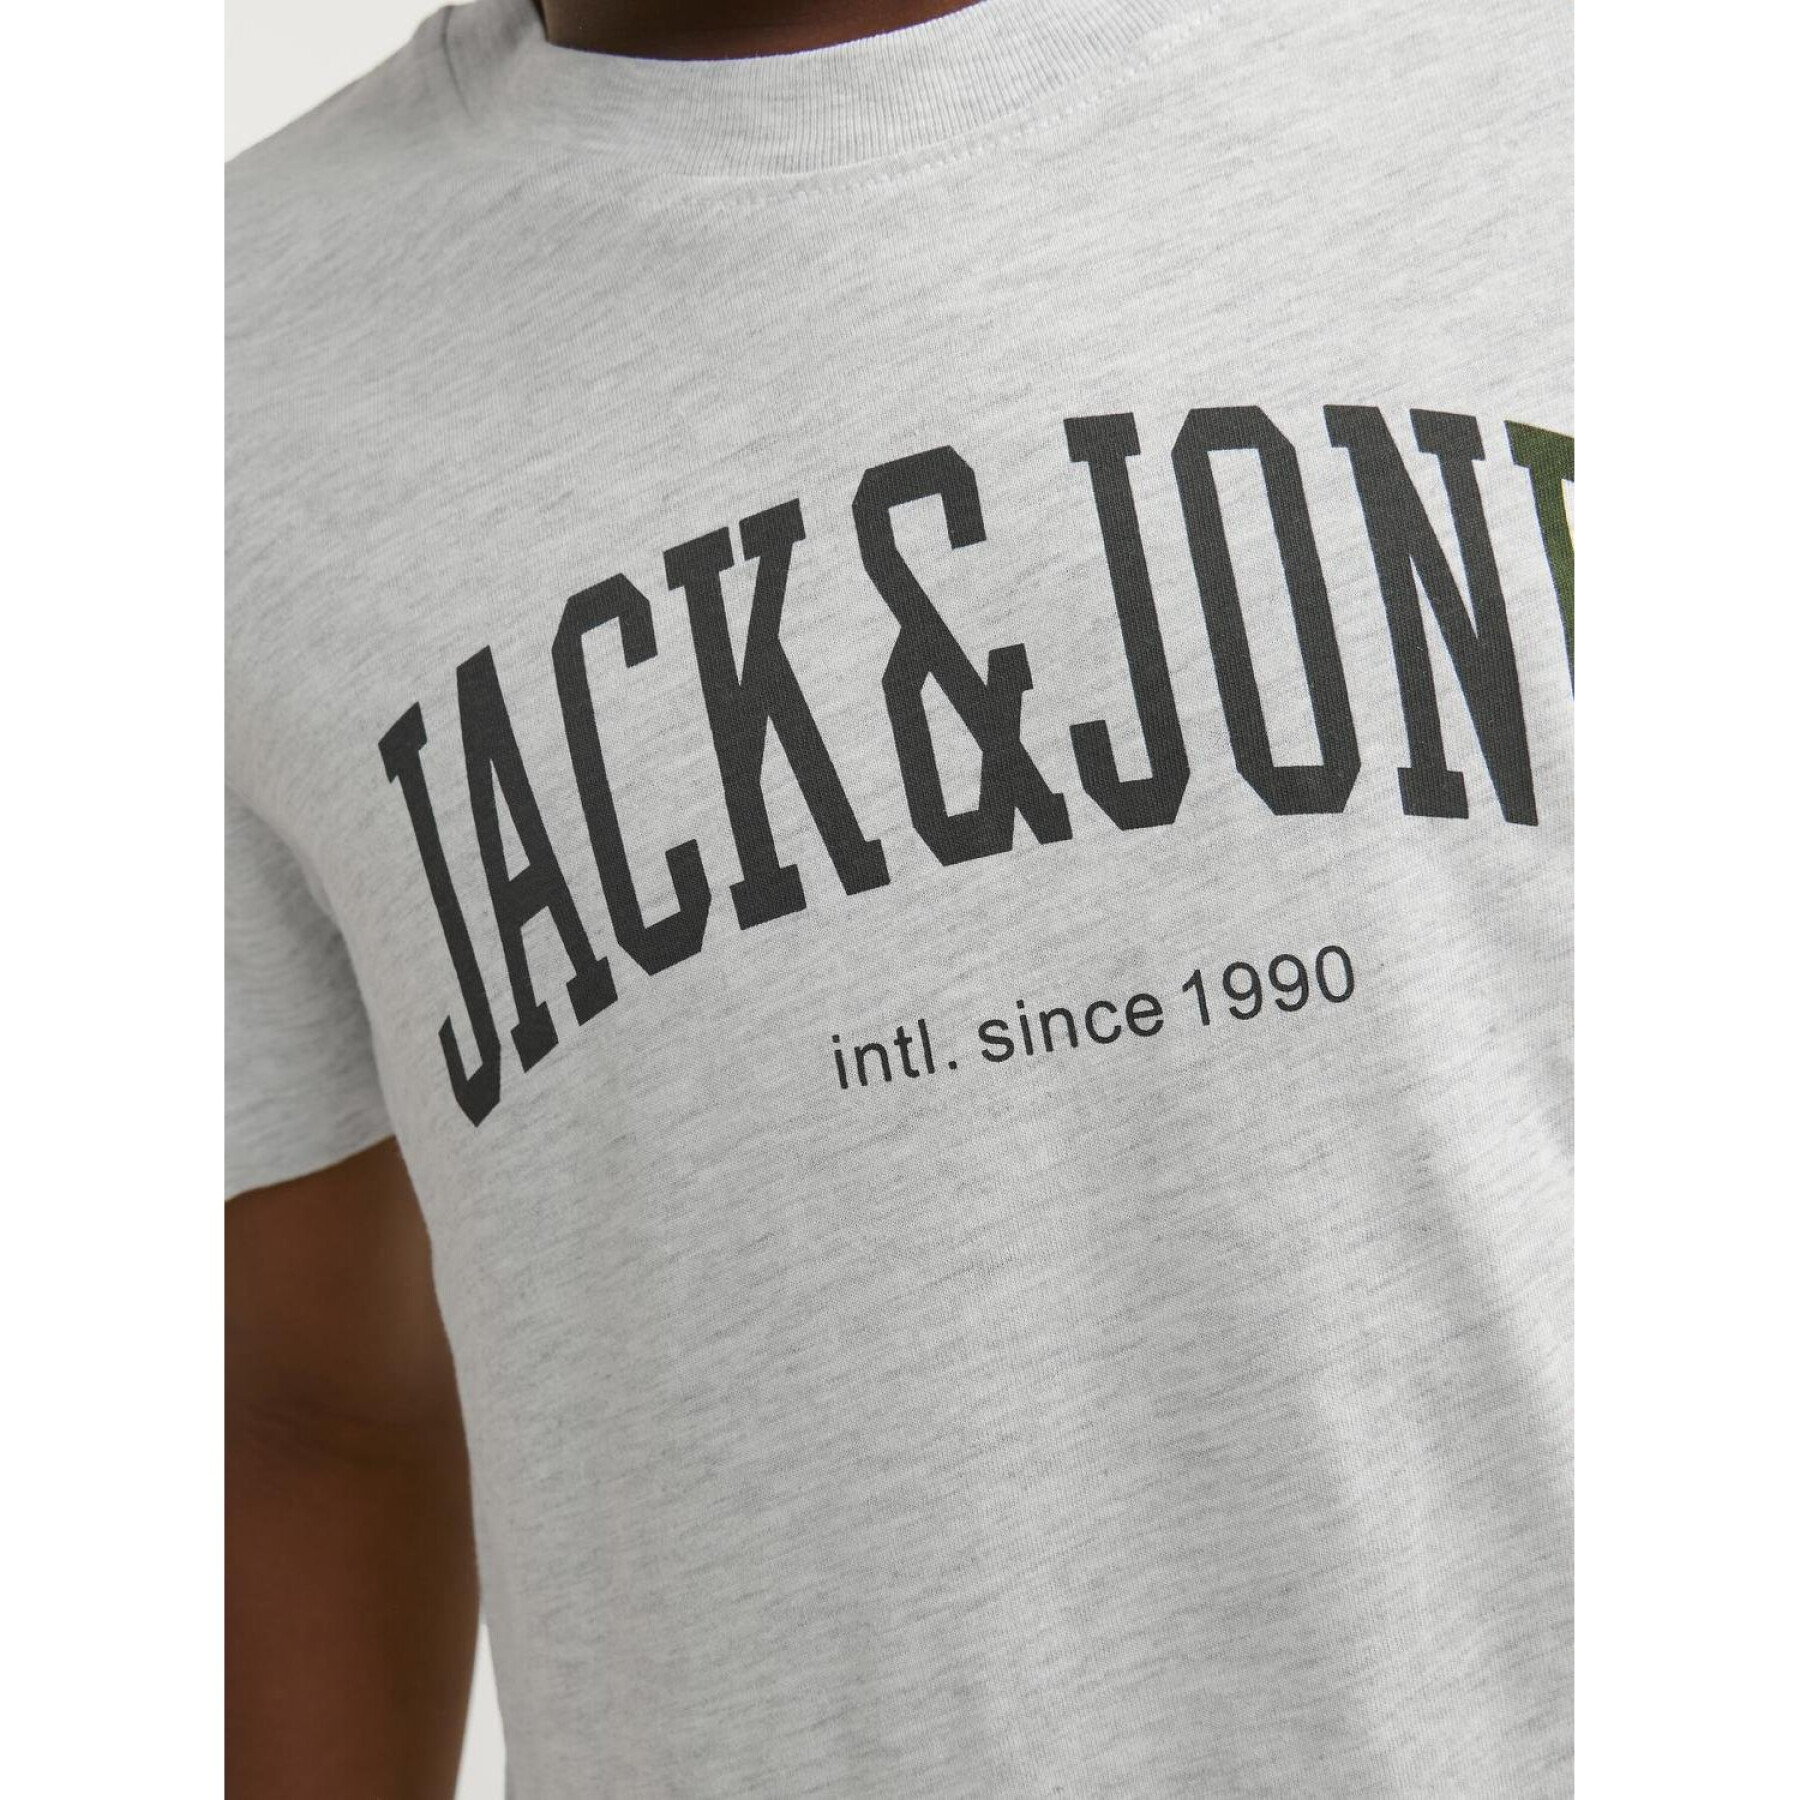 T-shirt per bambini Jack & Jones Josh